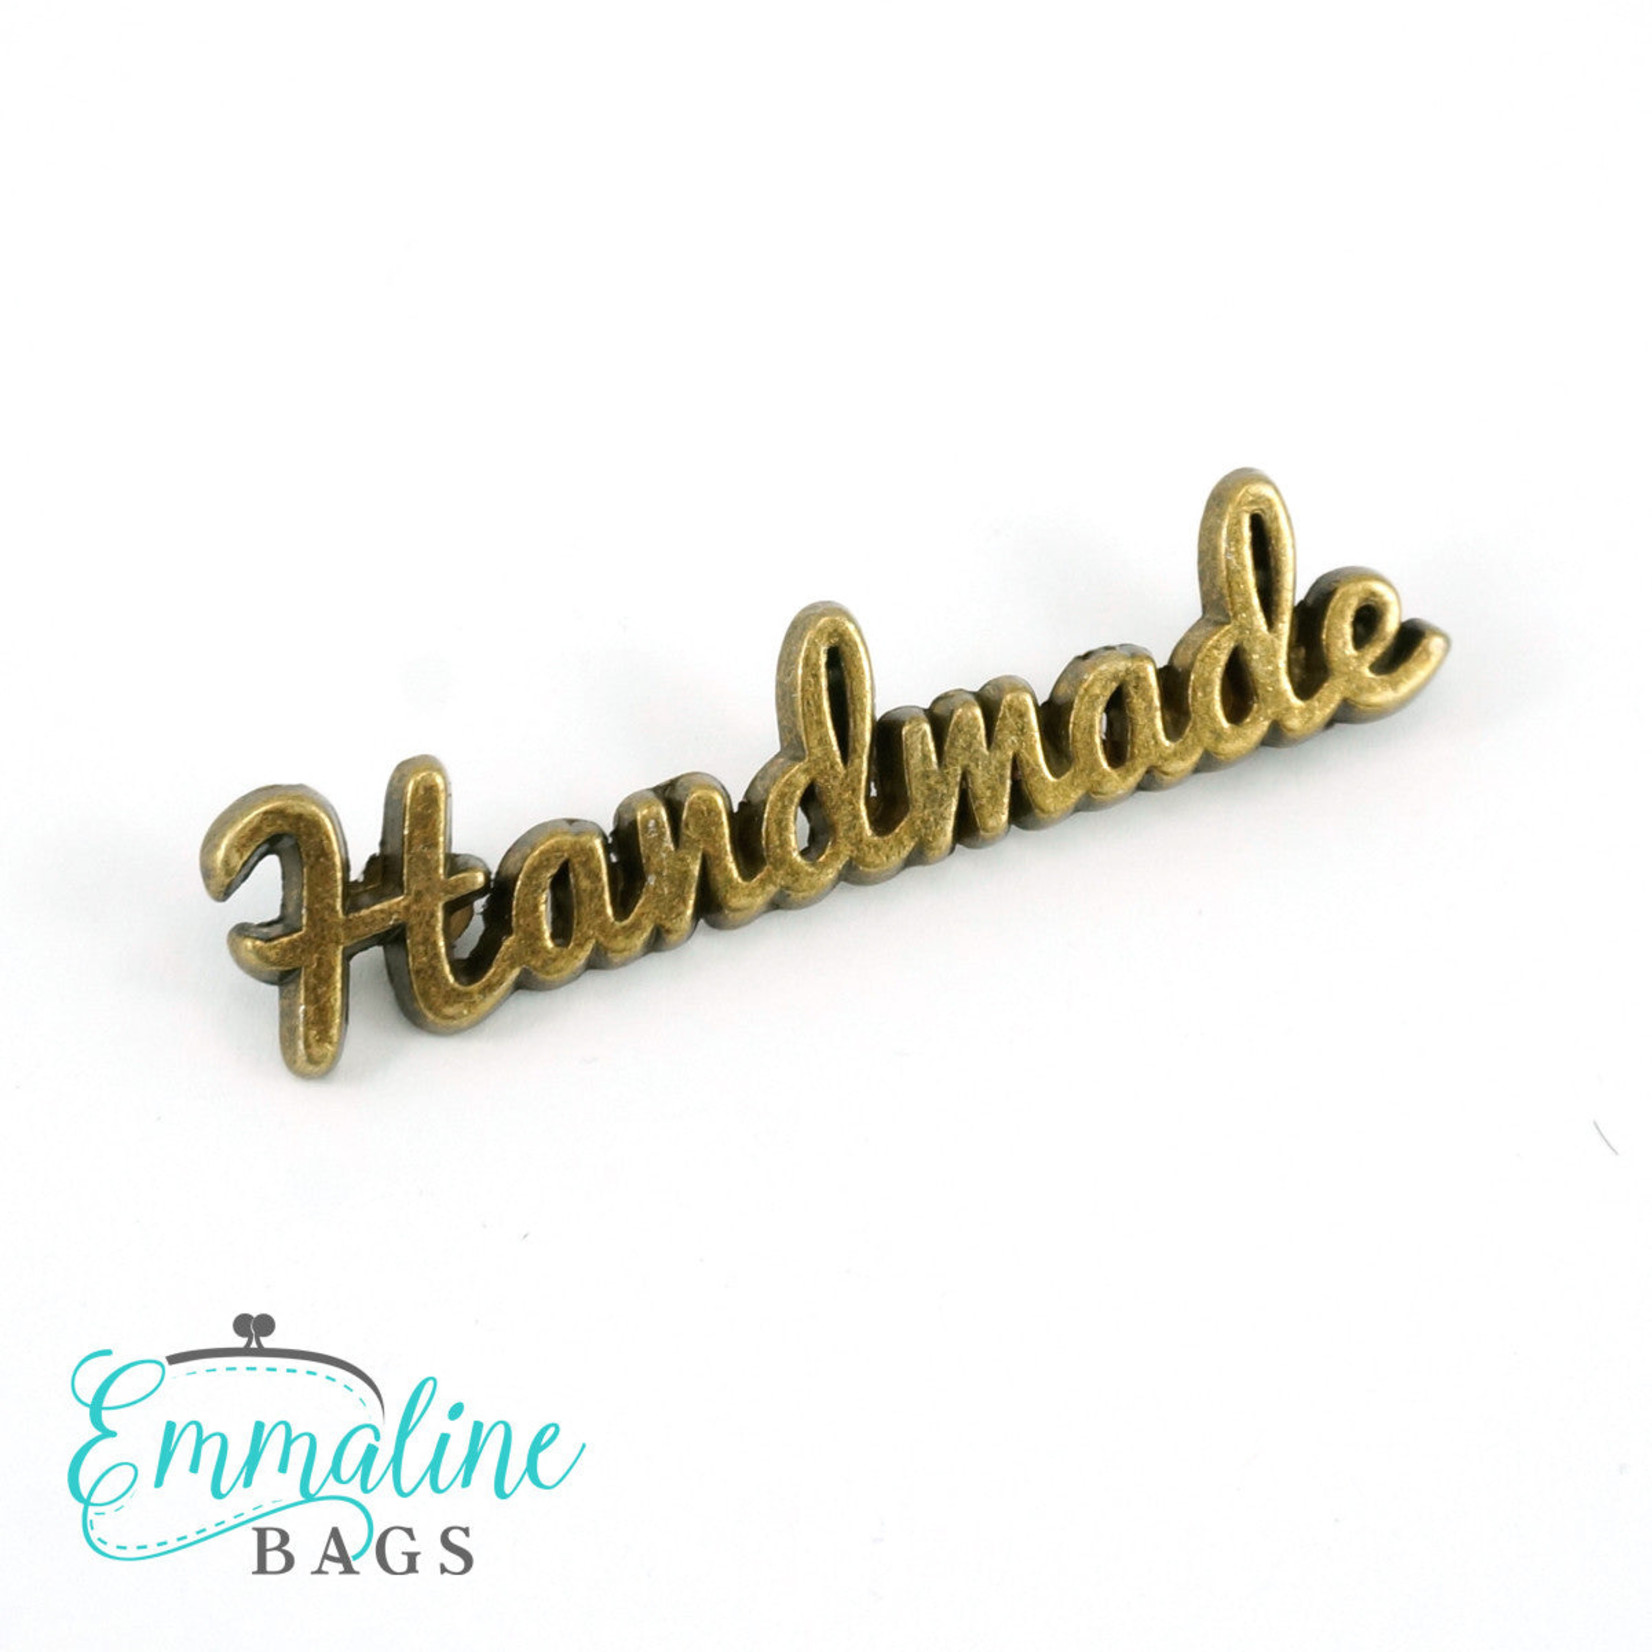 Emmaline Metal Bag Label: Script Style "Handmade"